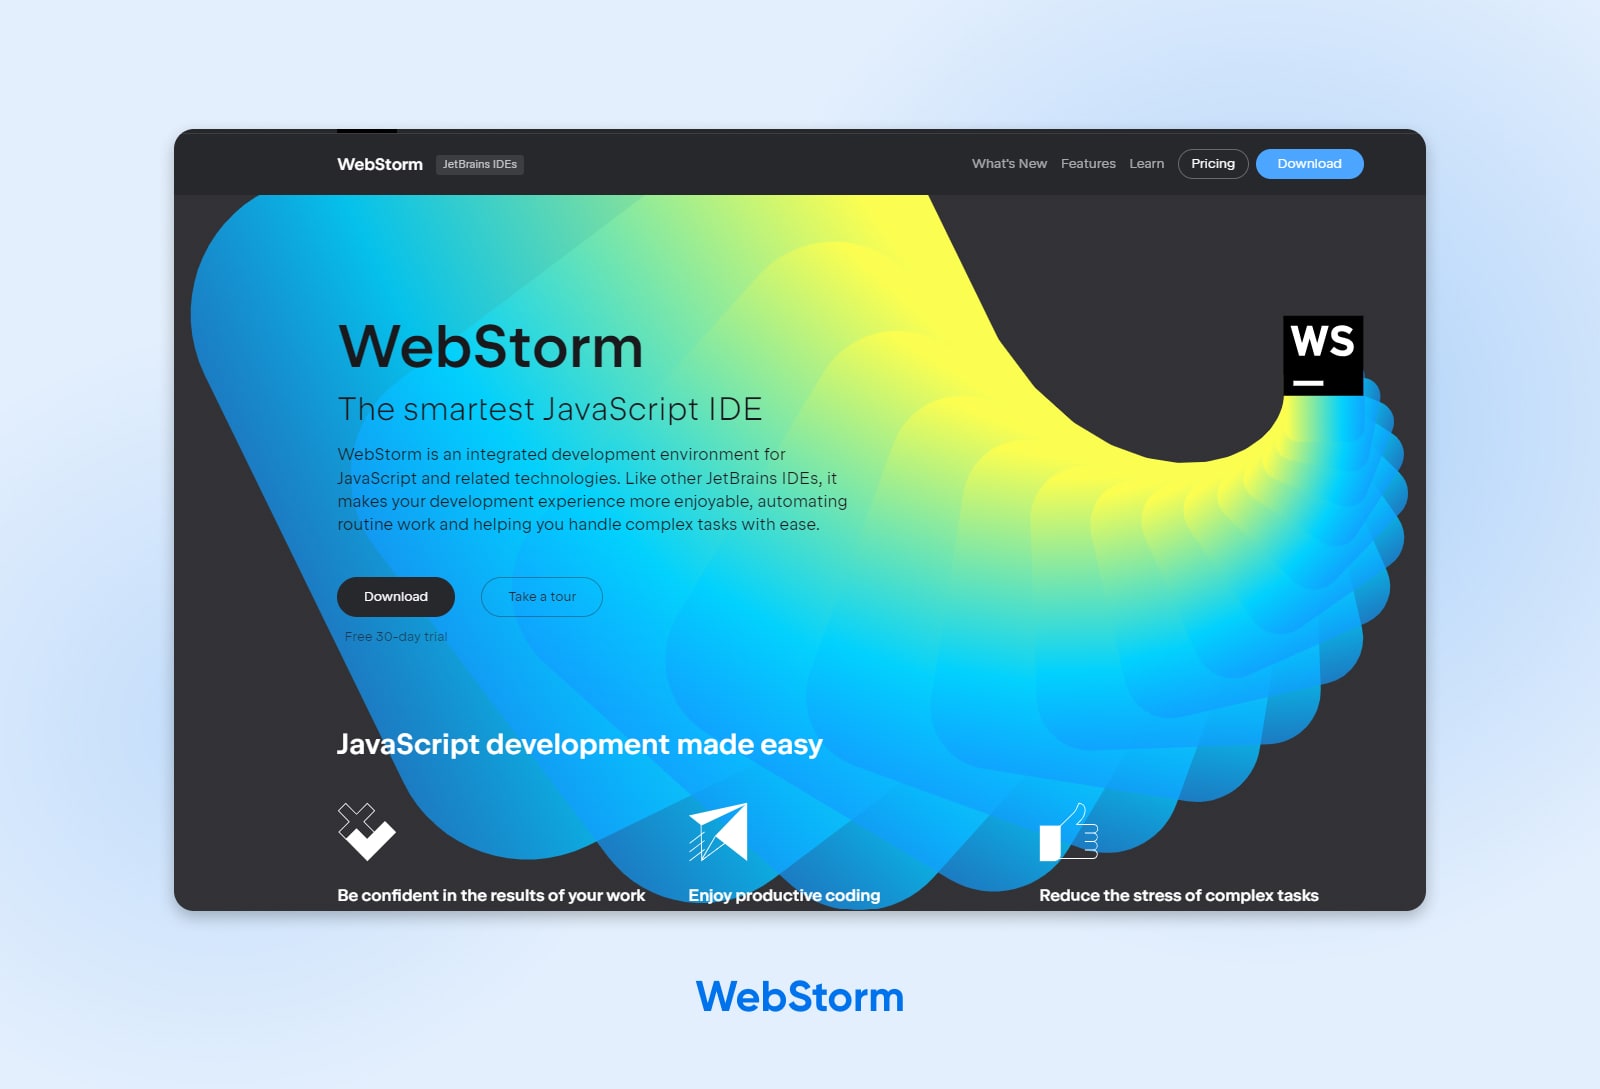 webstorm webpage screenshot